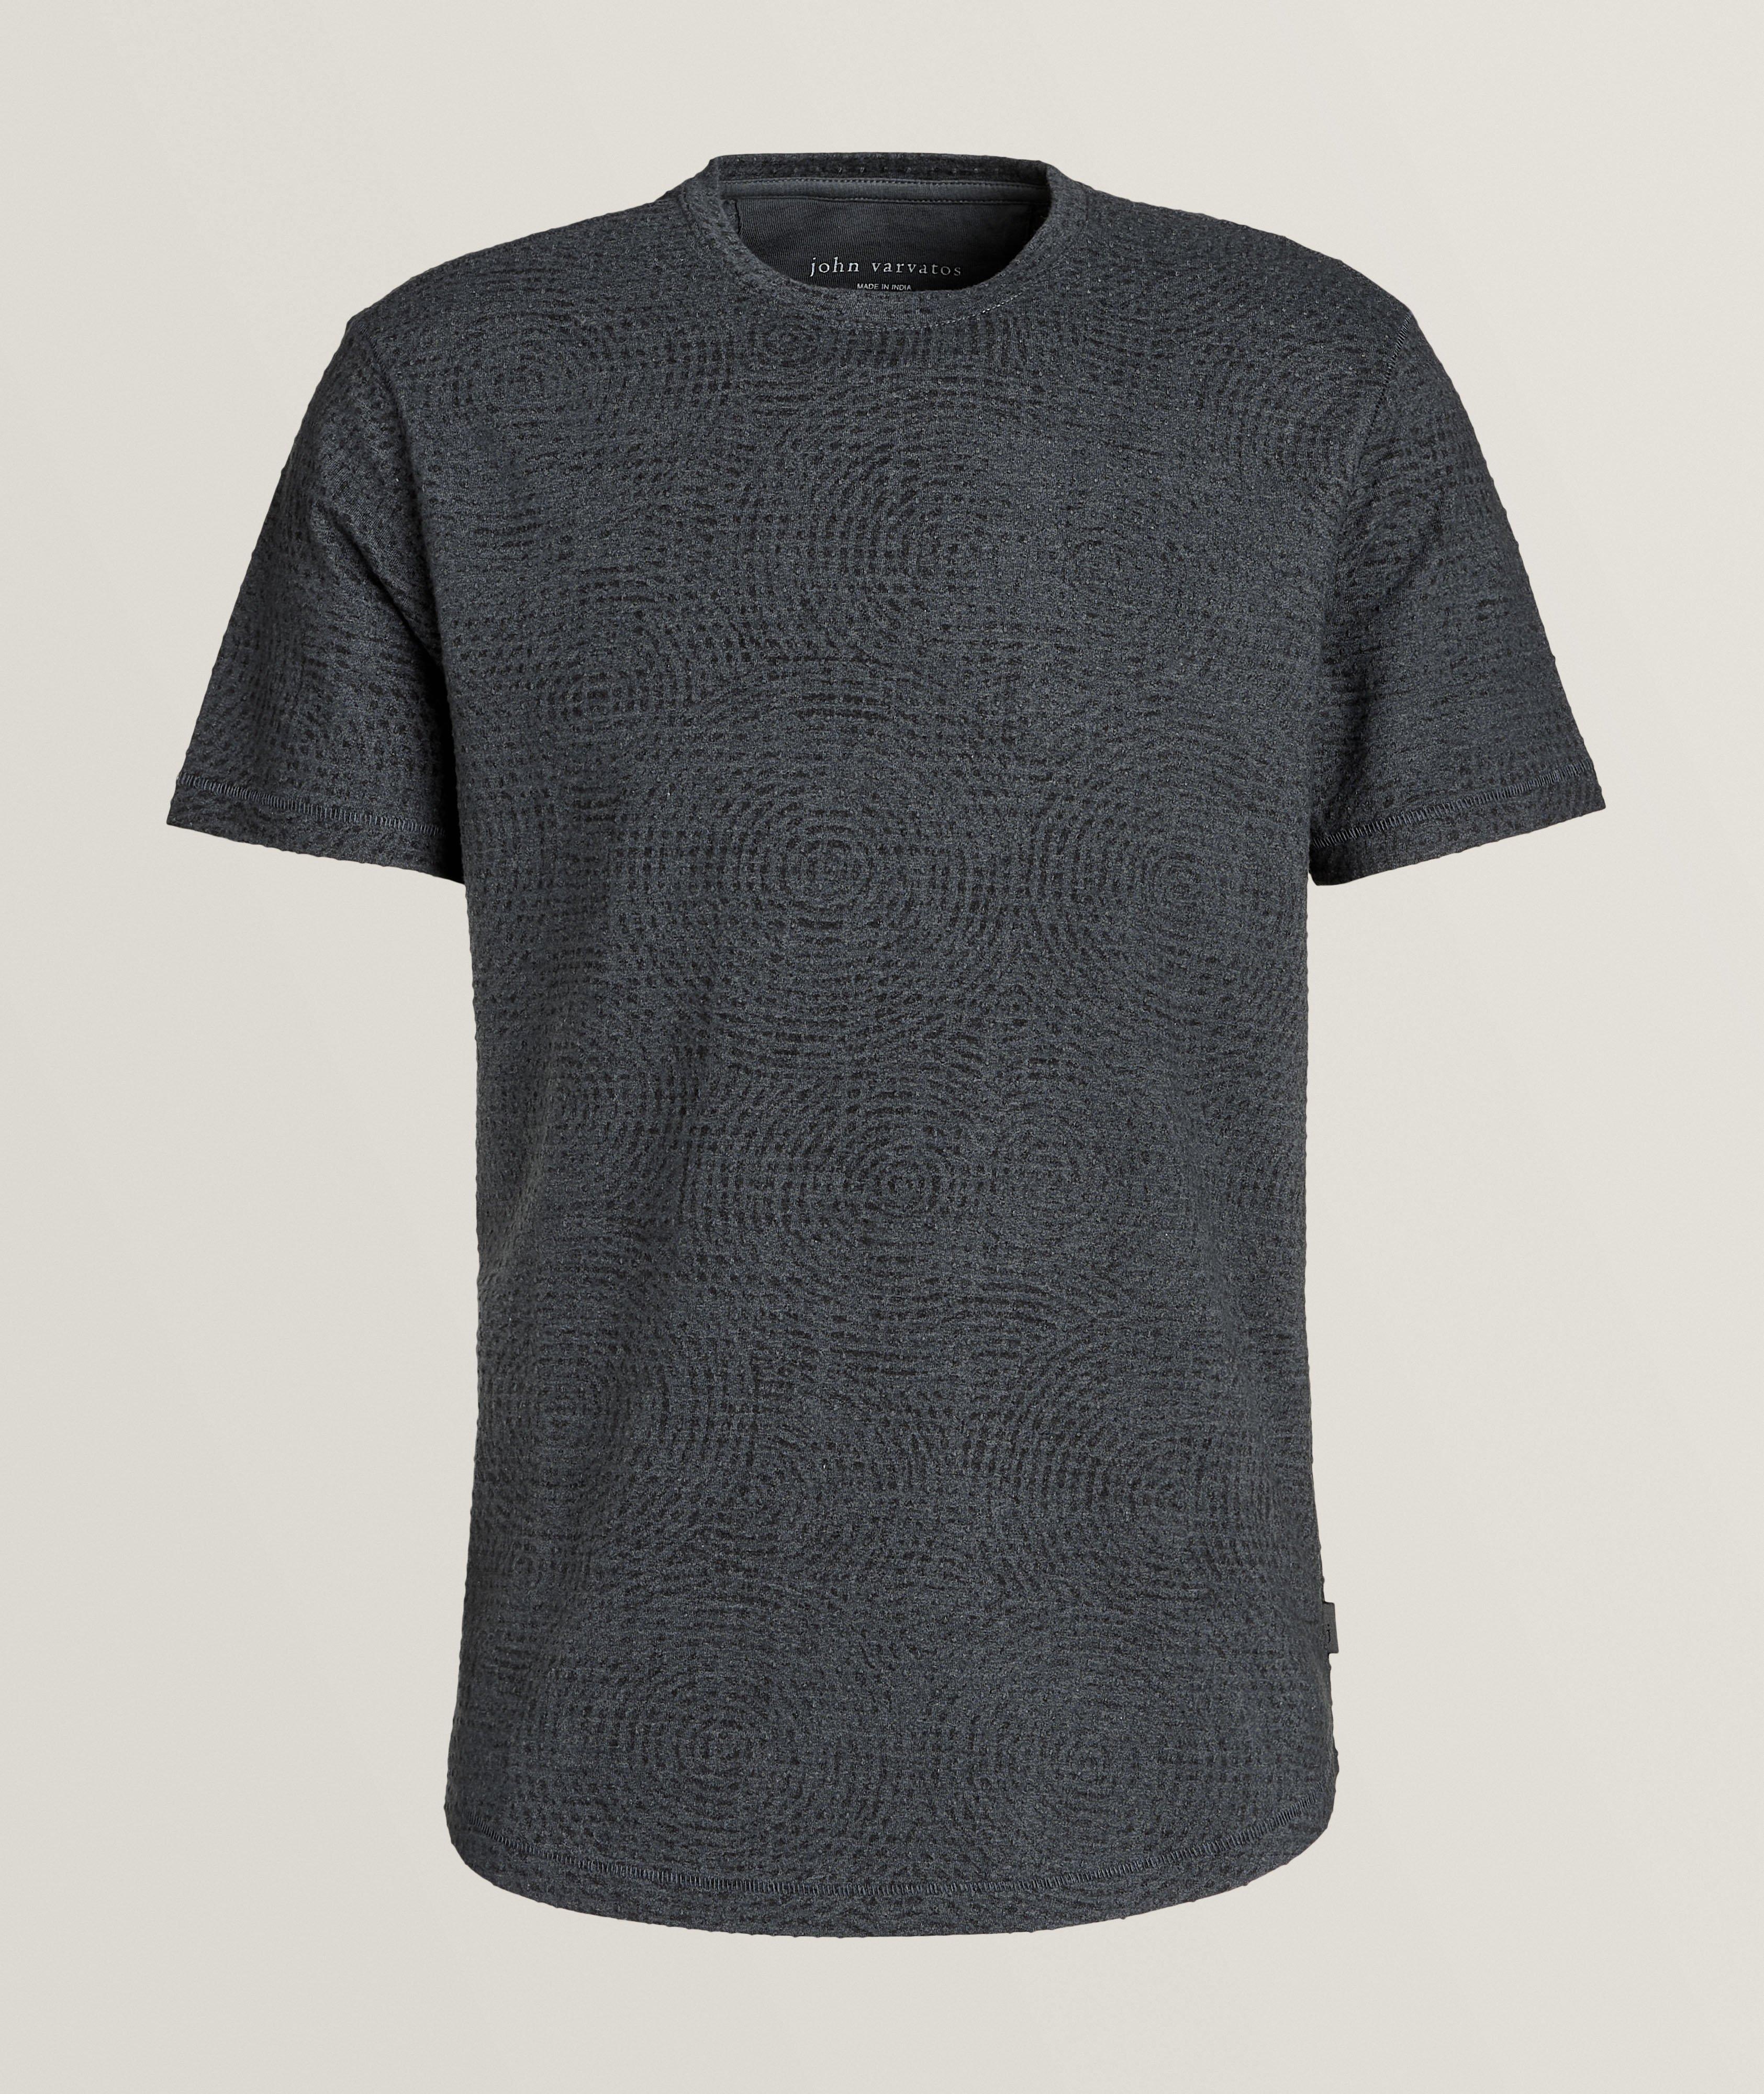 Textured Circular Stitch Cotton T-Shirt  image 0